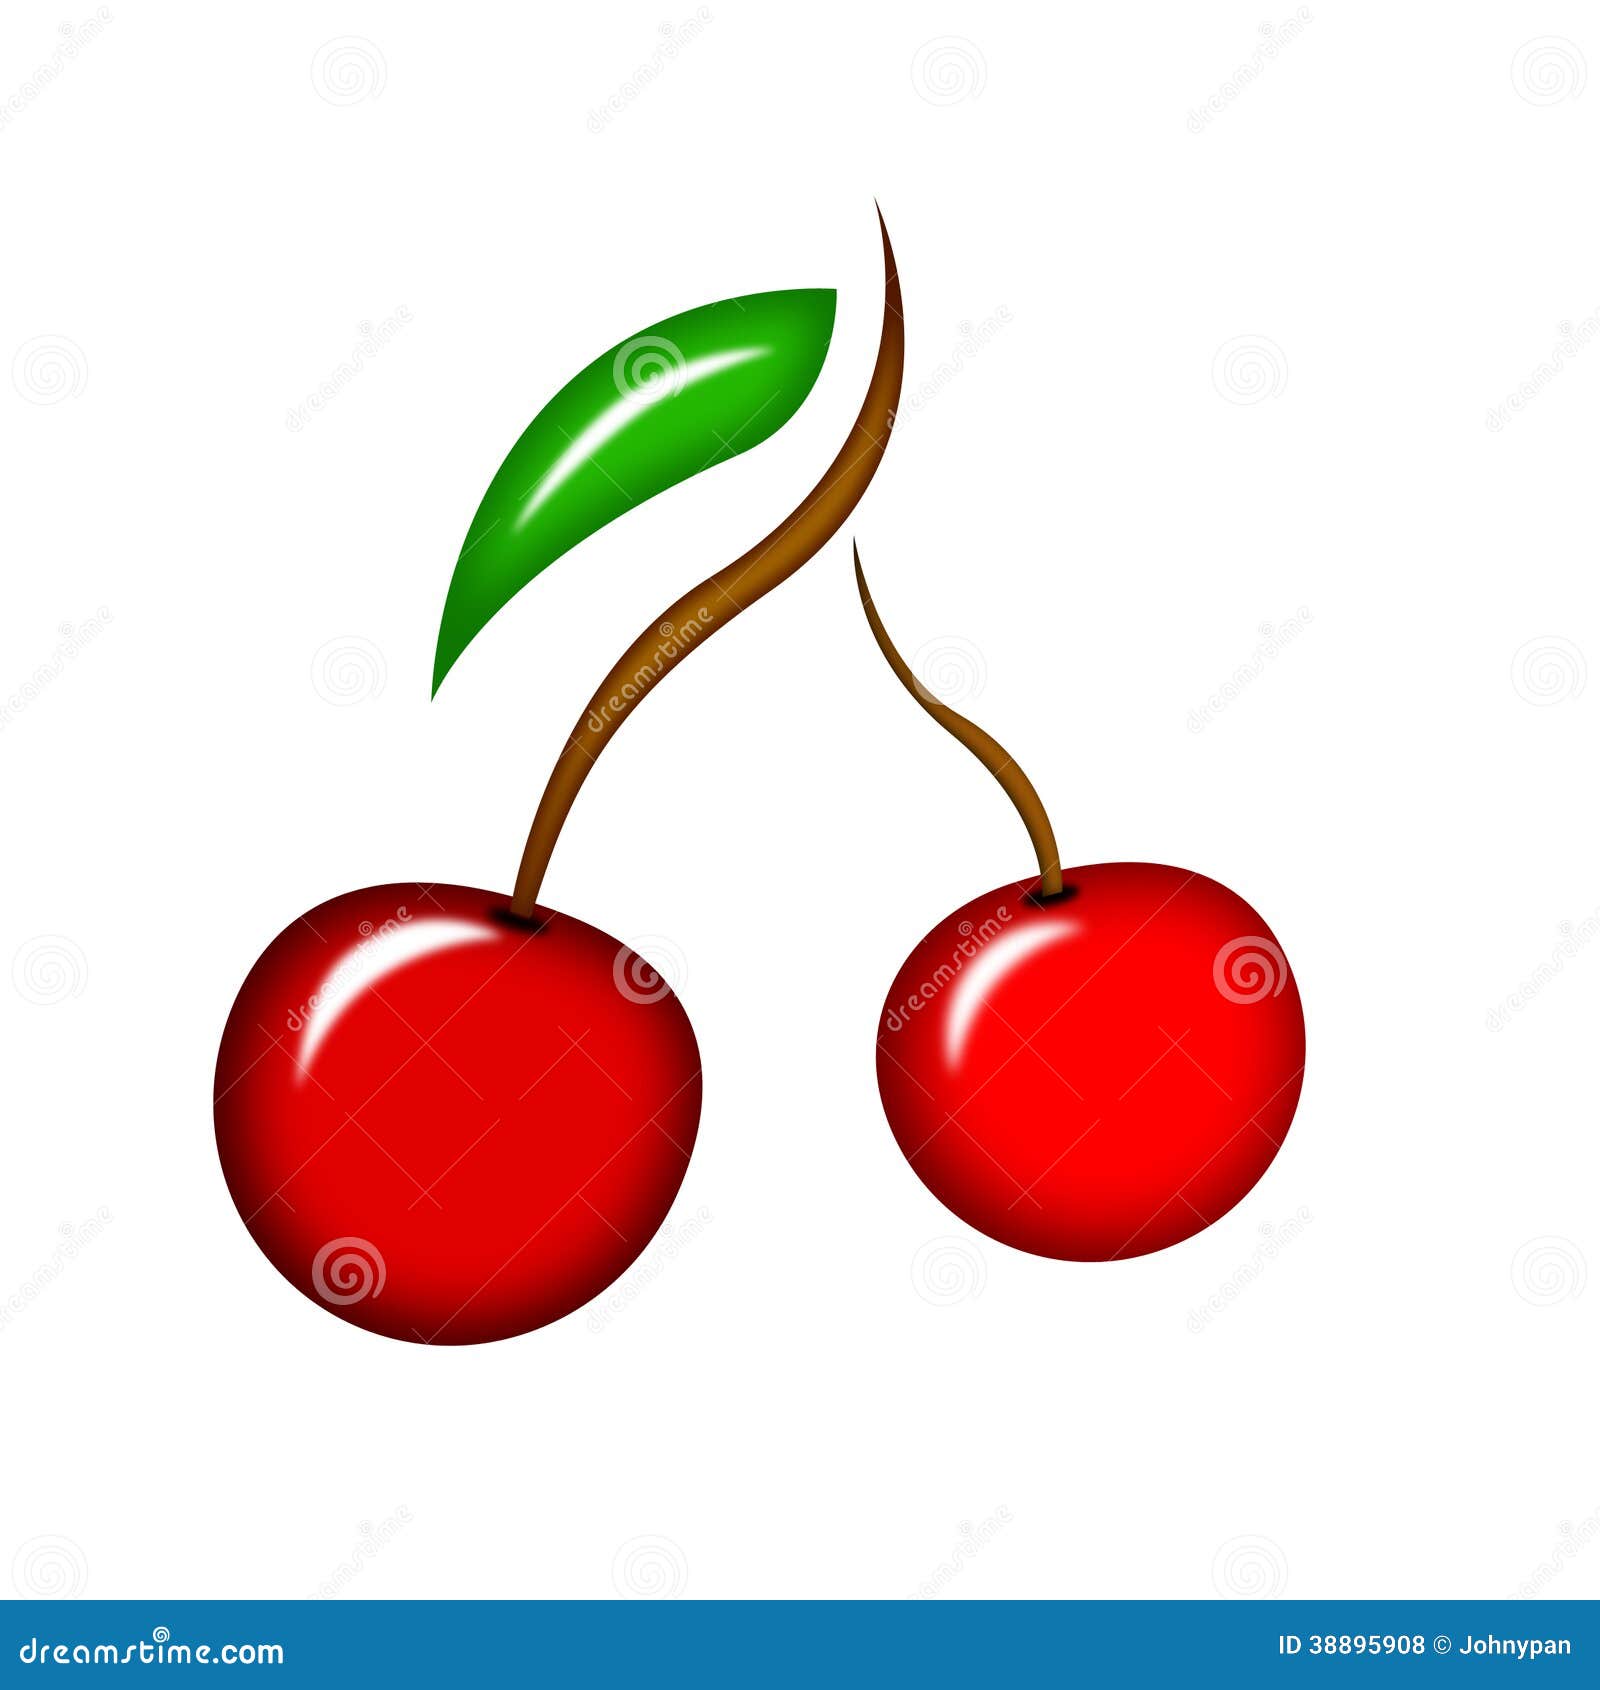 free clip art cherries fruit - photo #45